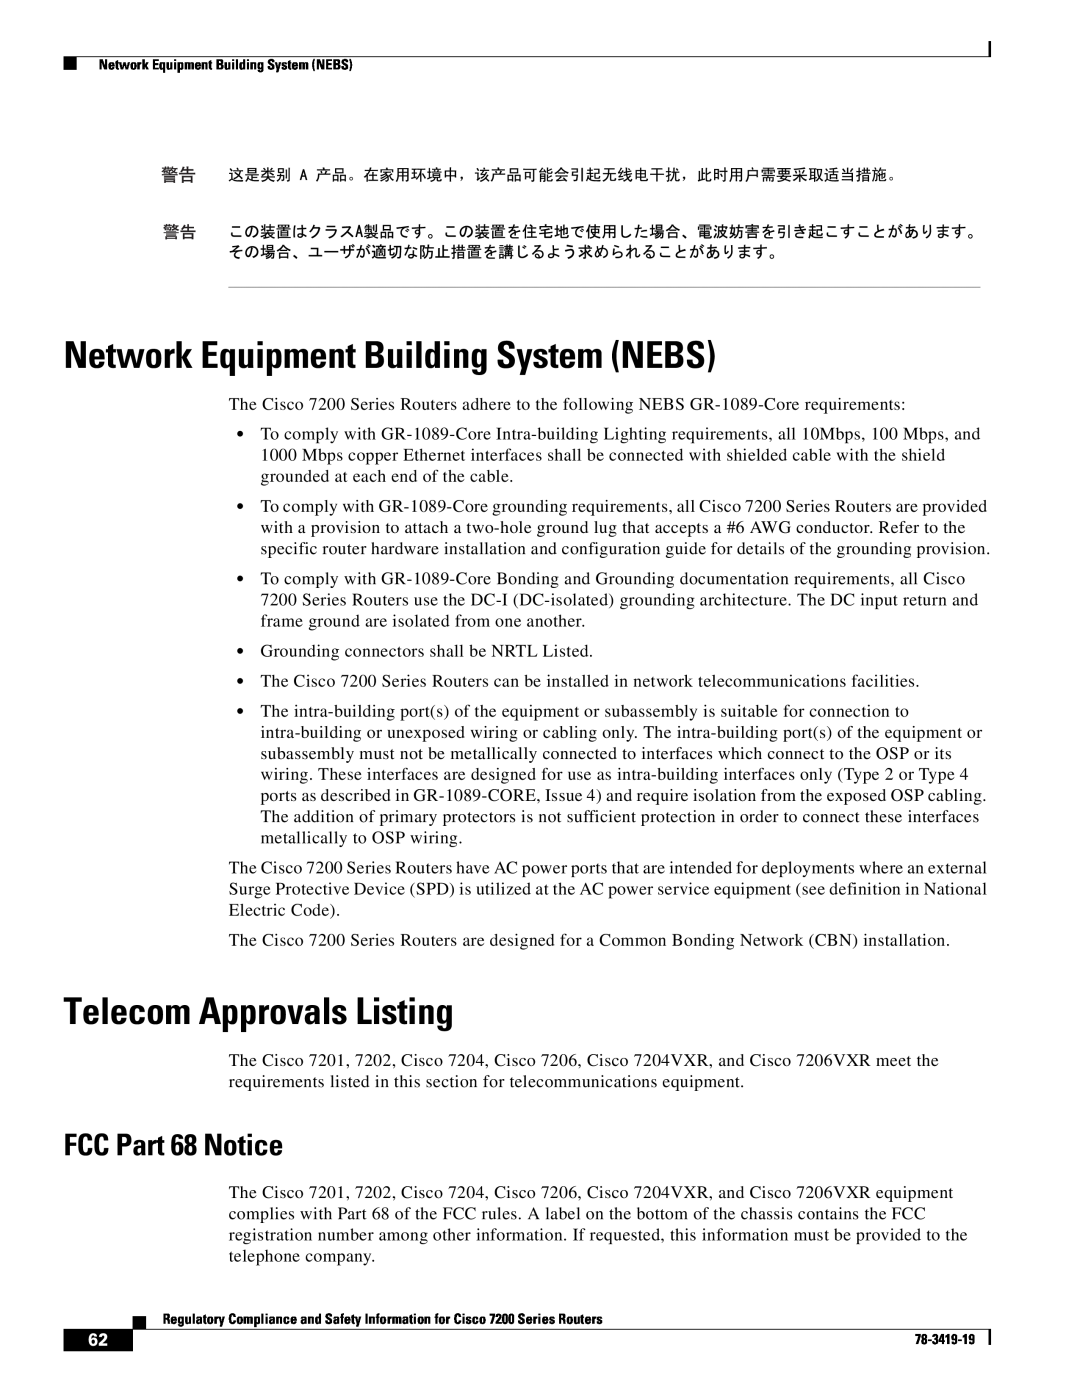 Cisco Systems 7204 VXR, 7206 VXR Network Equipment Building System NEBS, Telecom Approvals Listing, FCC Part 68 Notice 